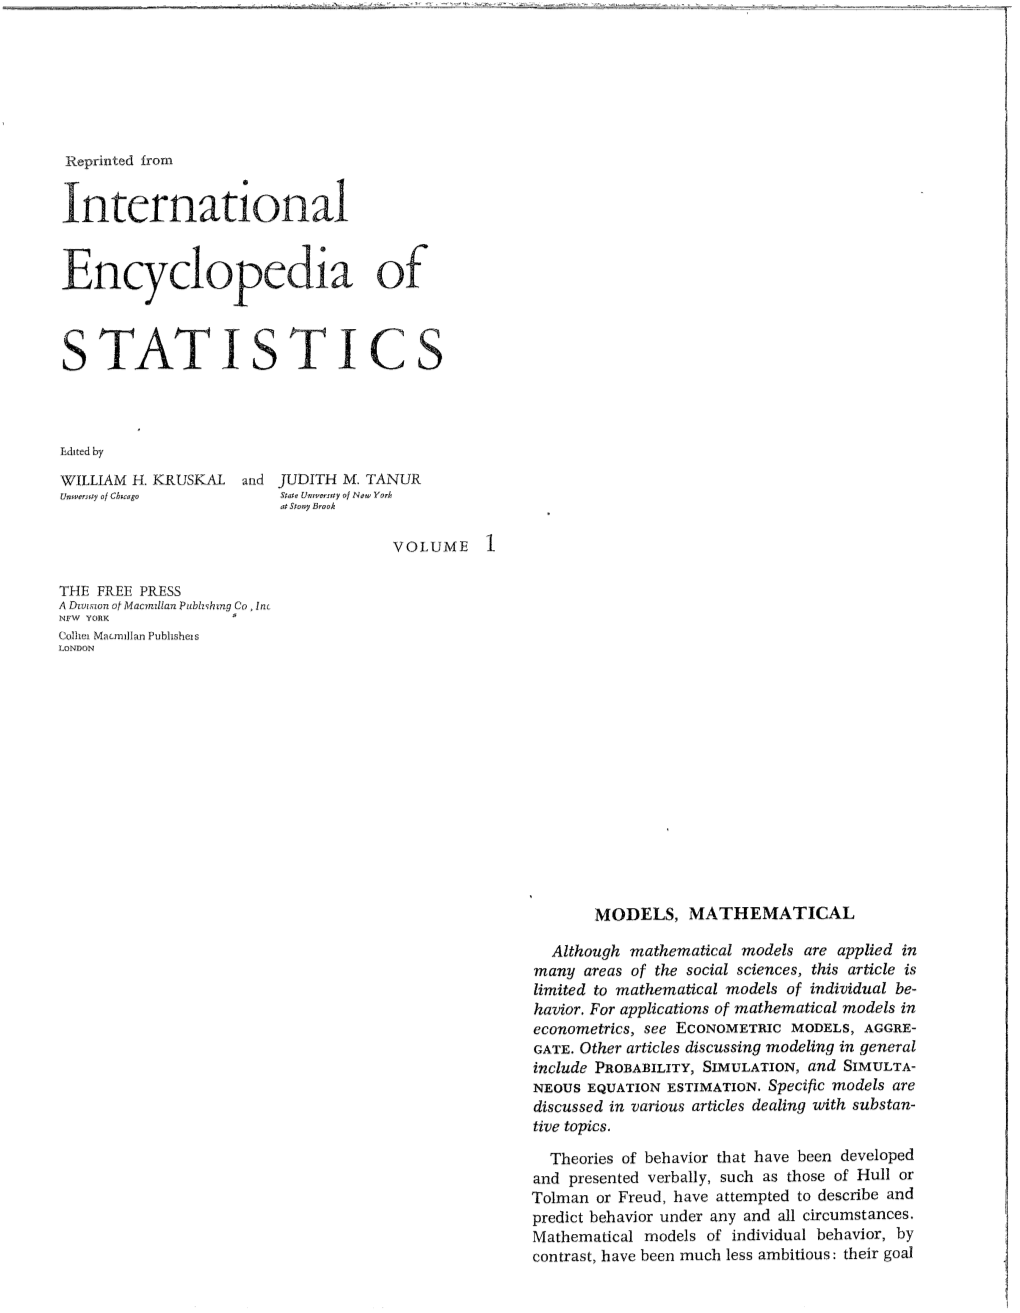 International Encyclopedia of STATISTICS